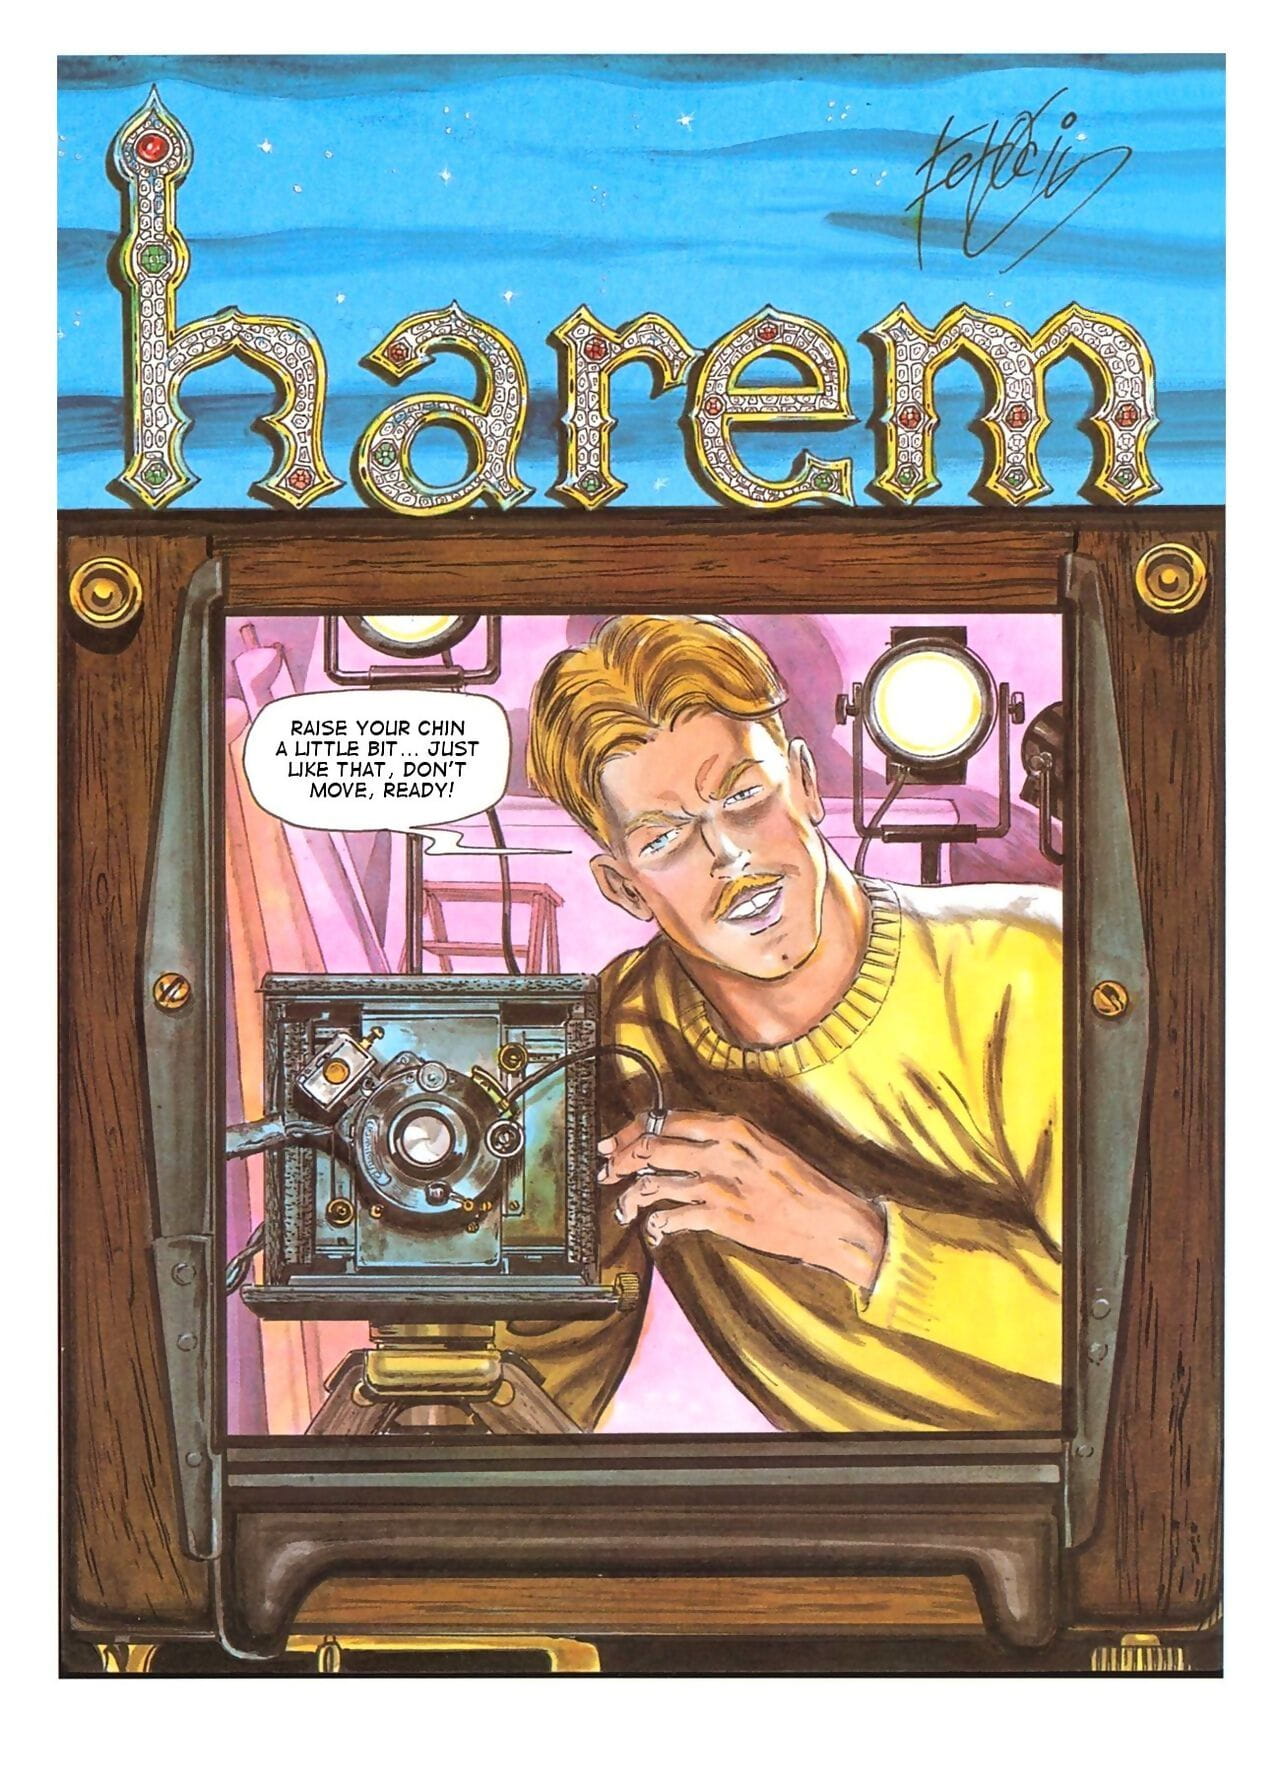 Harem page 1